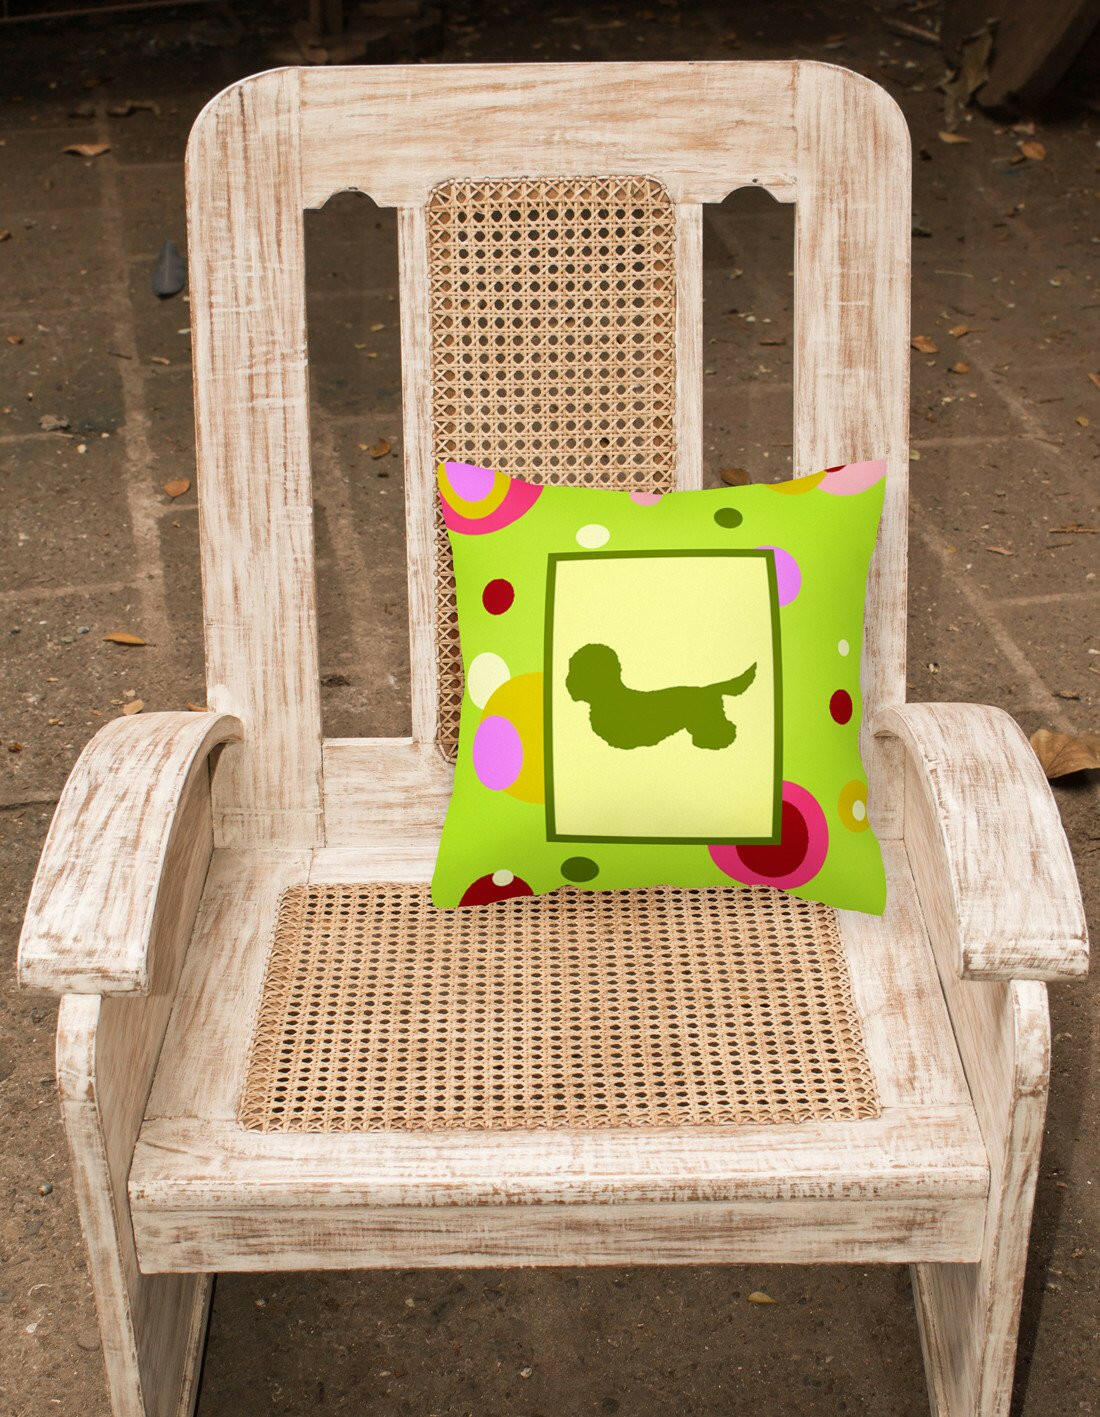 Dandie Dinmont Terrier Decorative   Canvas Fabric Pillow by Caroline's Treasures